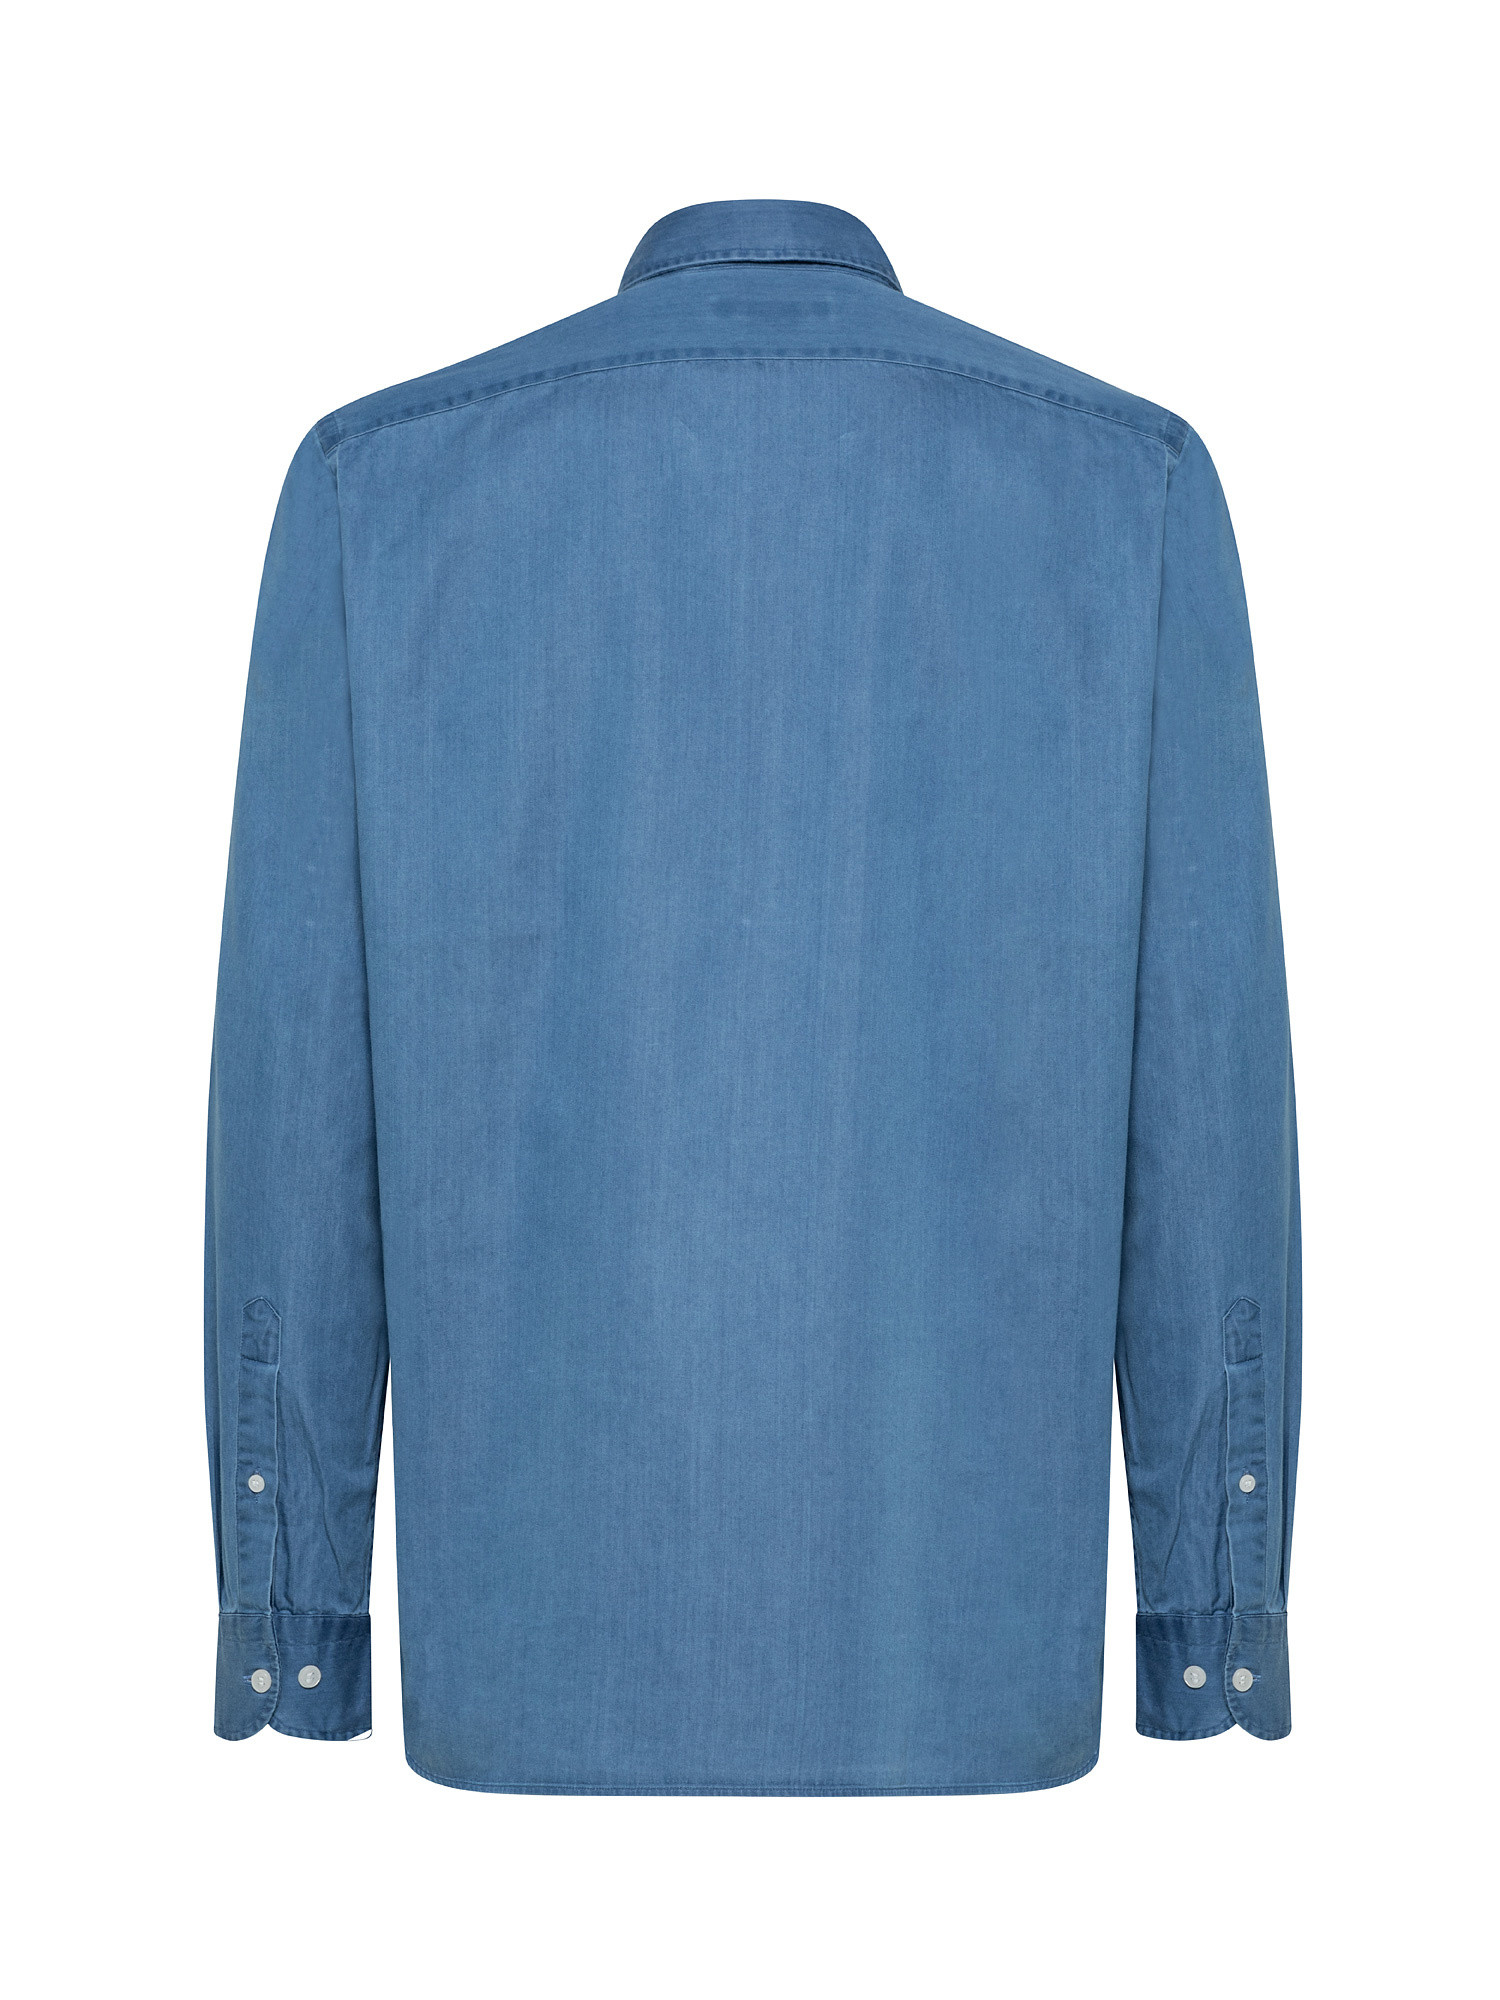 Camicia tailor fit in denim, Azzurro scuro, large image number 1